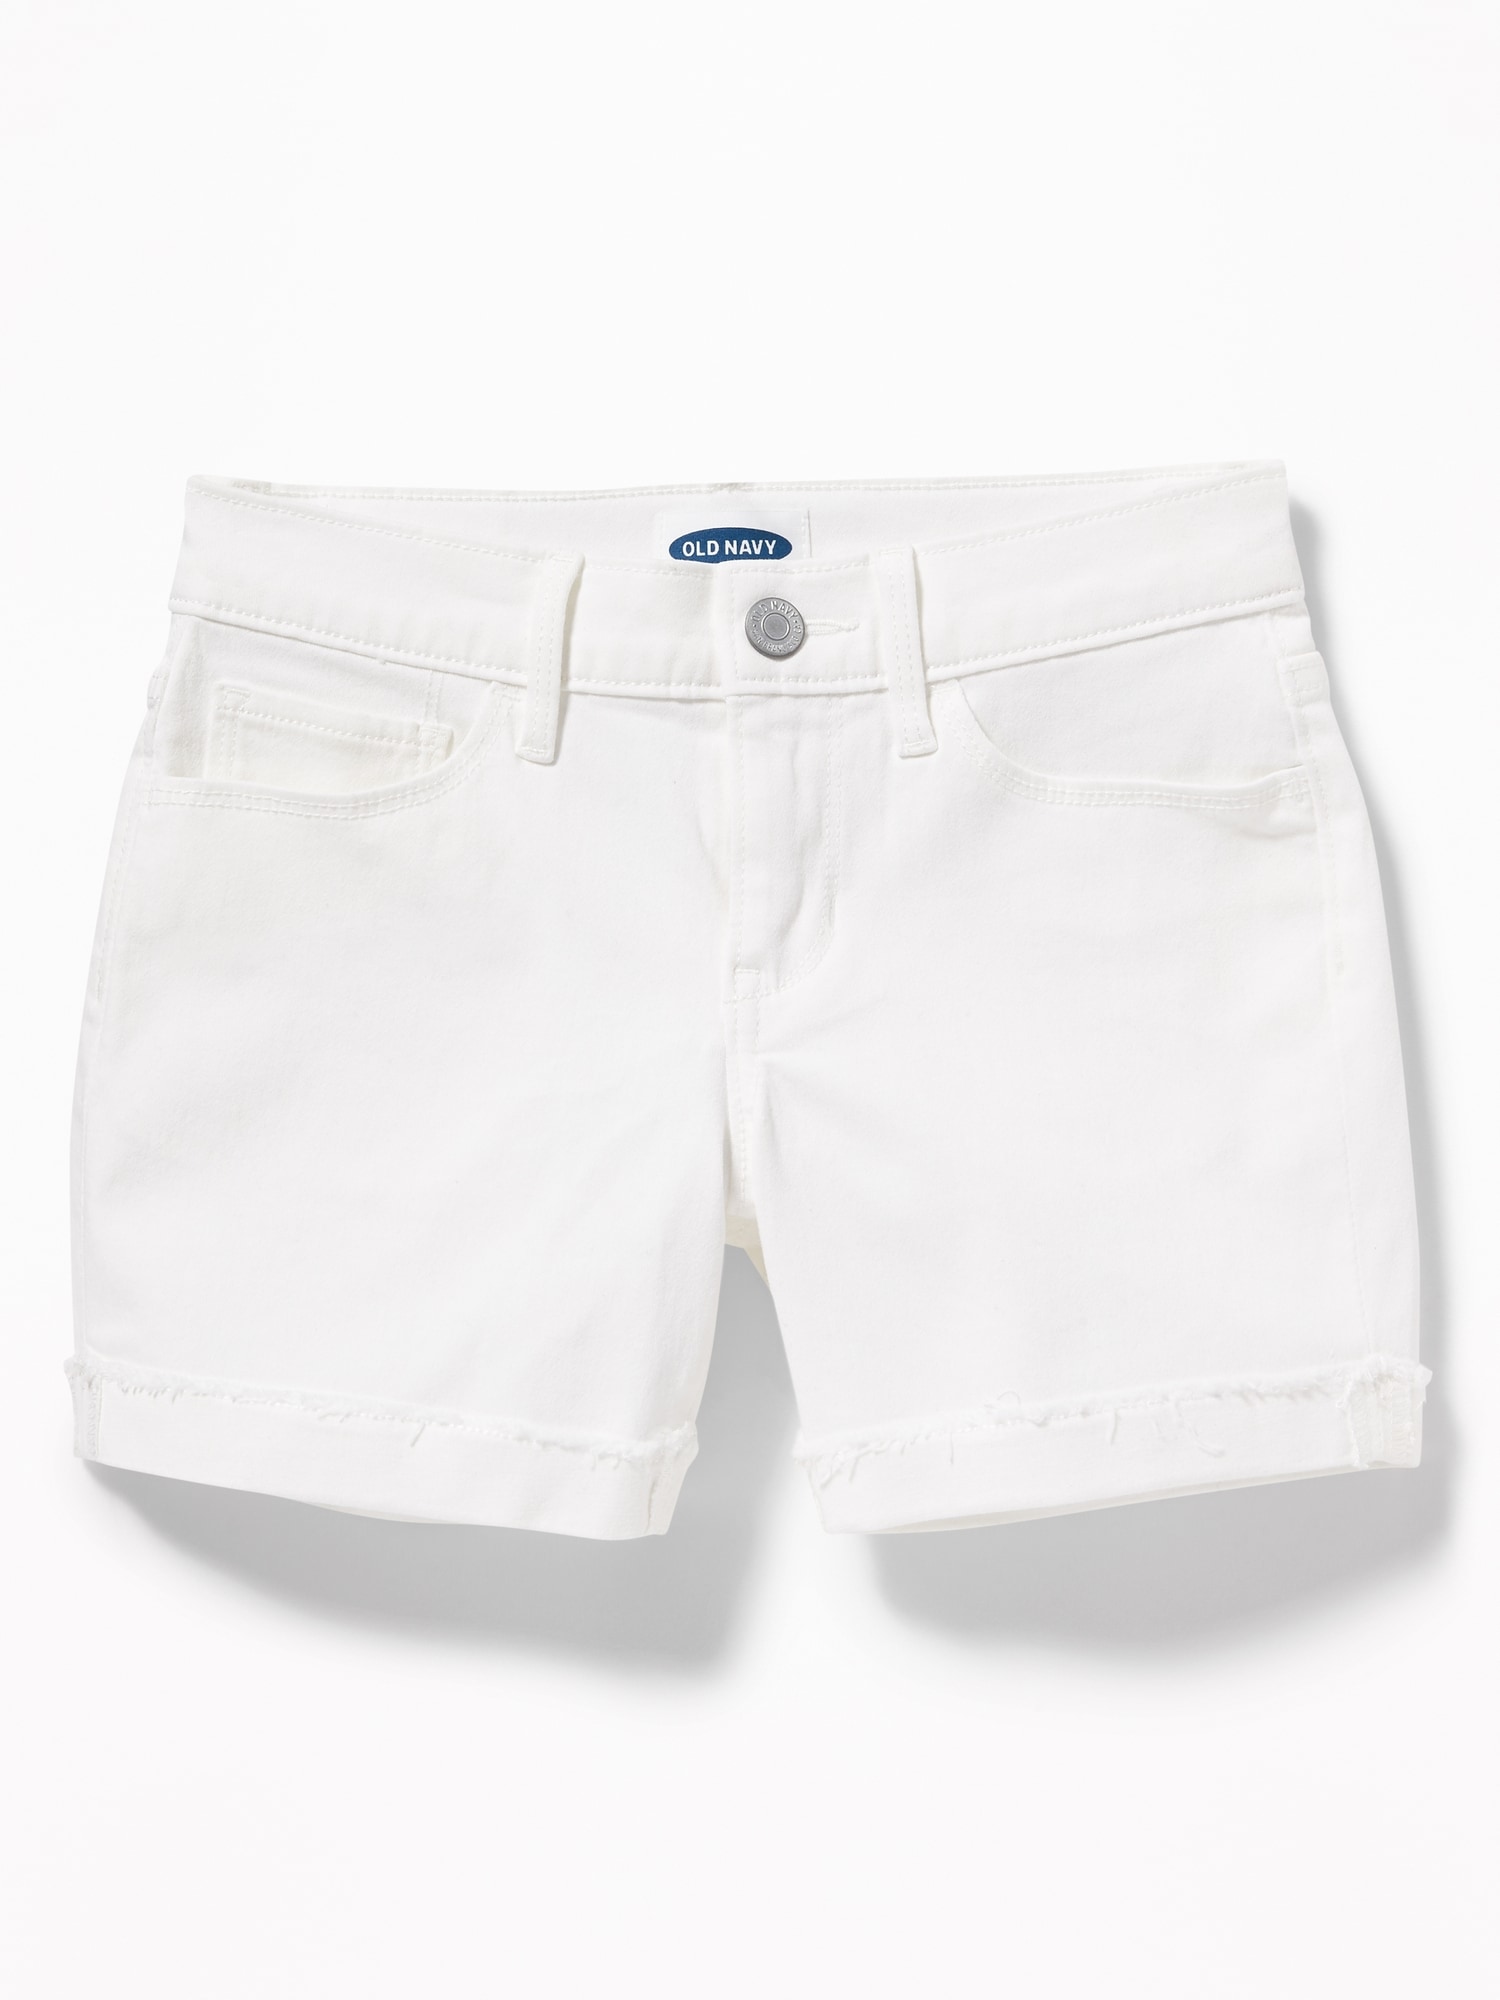 old navy white jean shorts